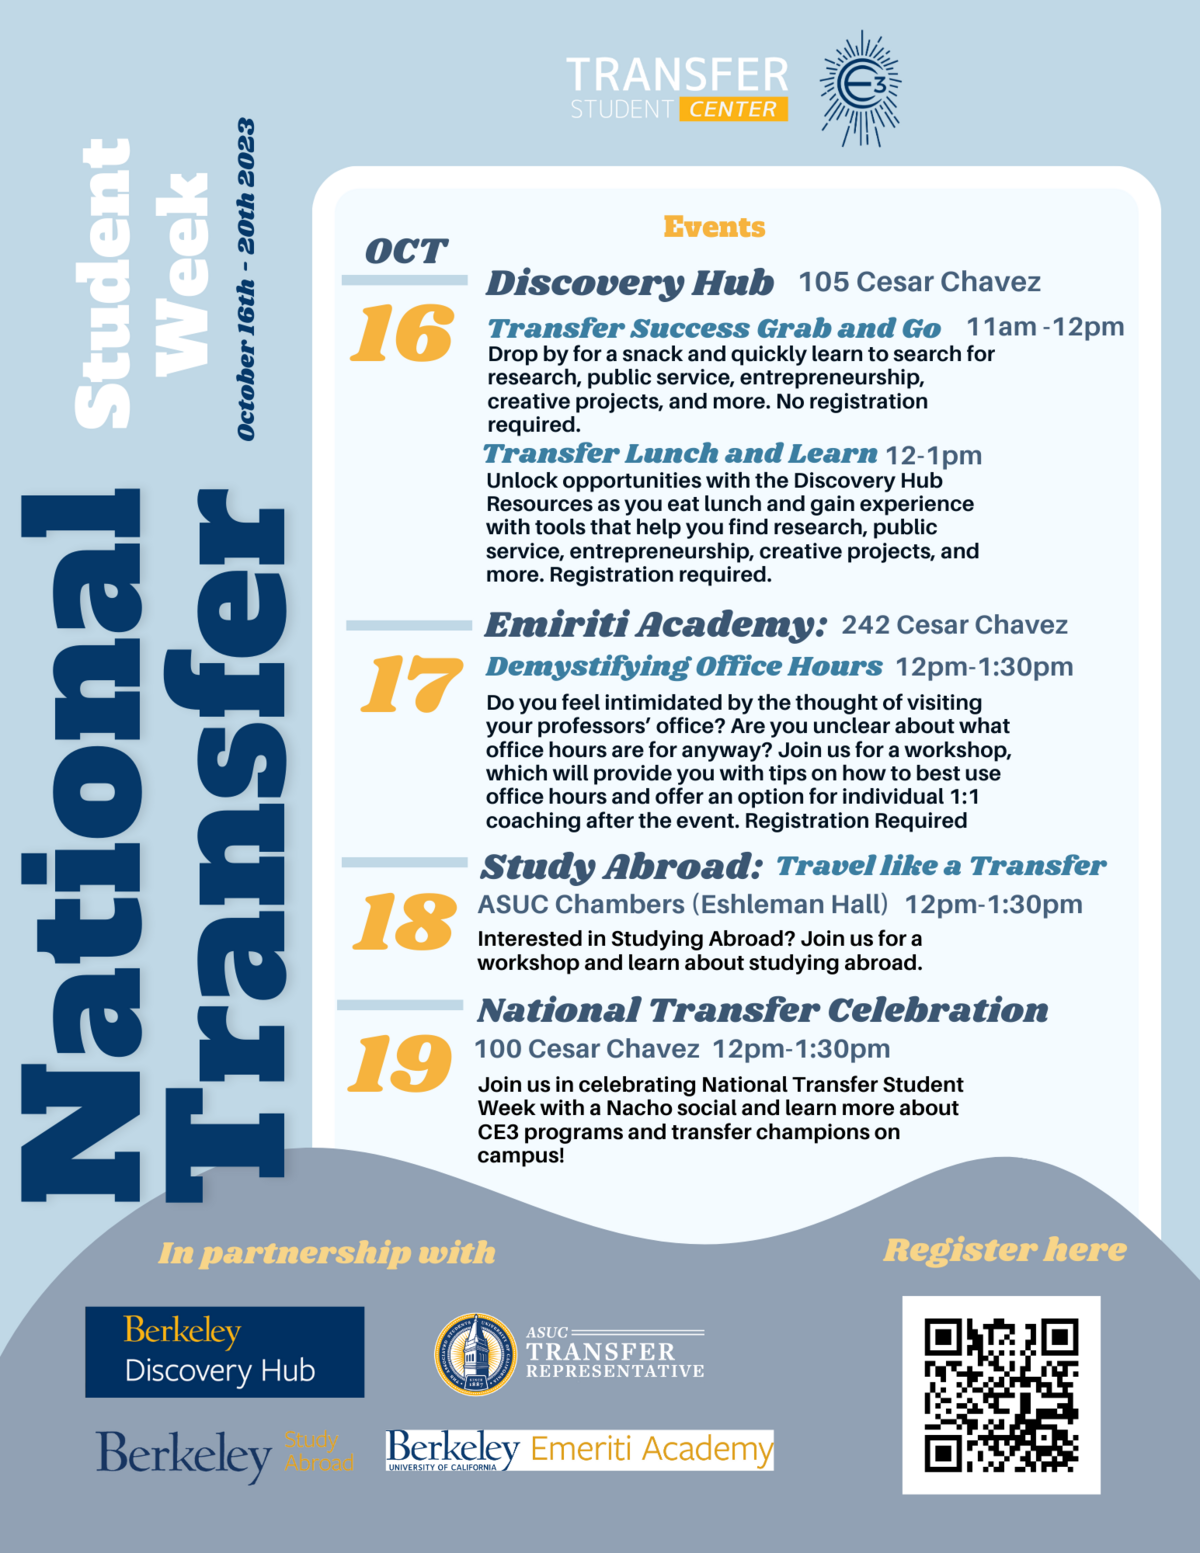 National Transfer Student Week event flyer